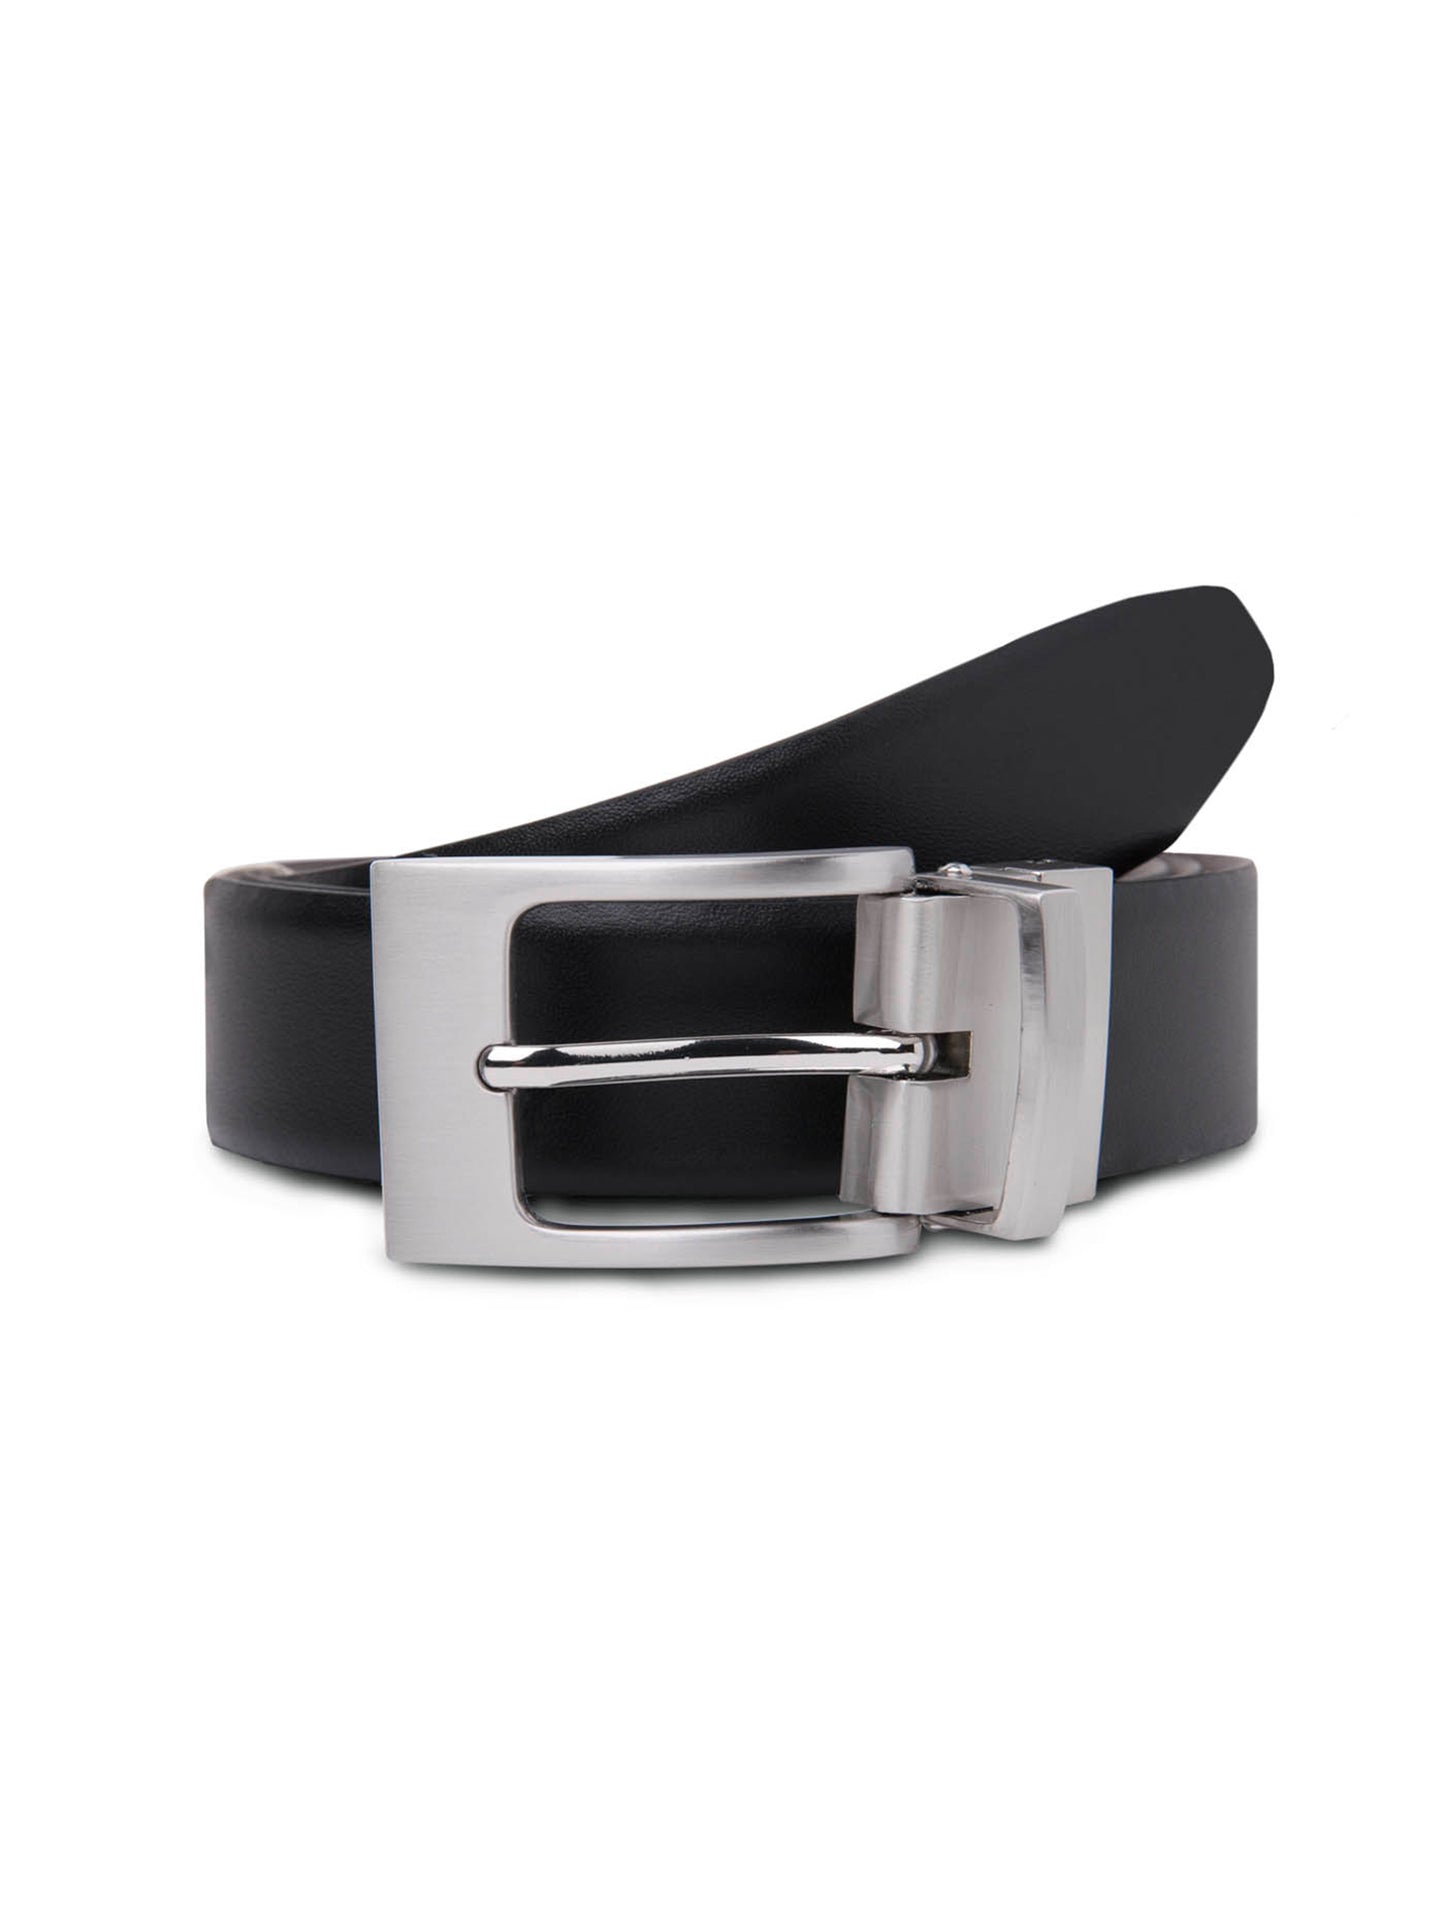 Black & Brown Leather Reversible Belt